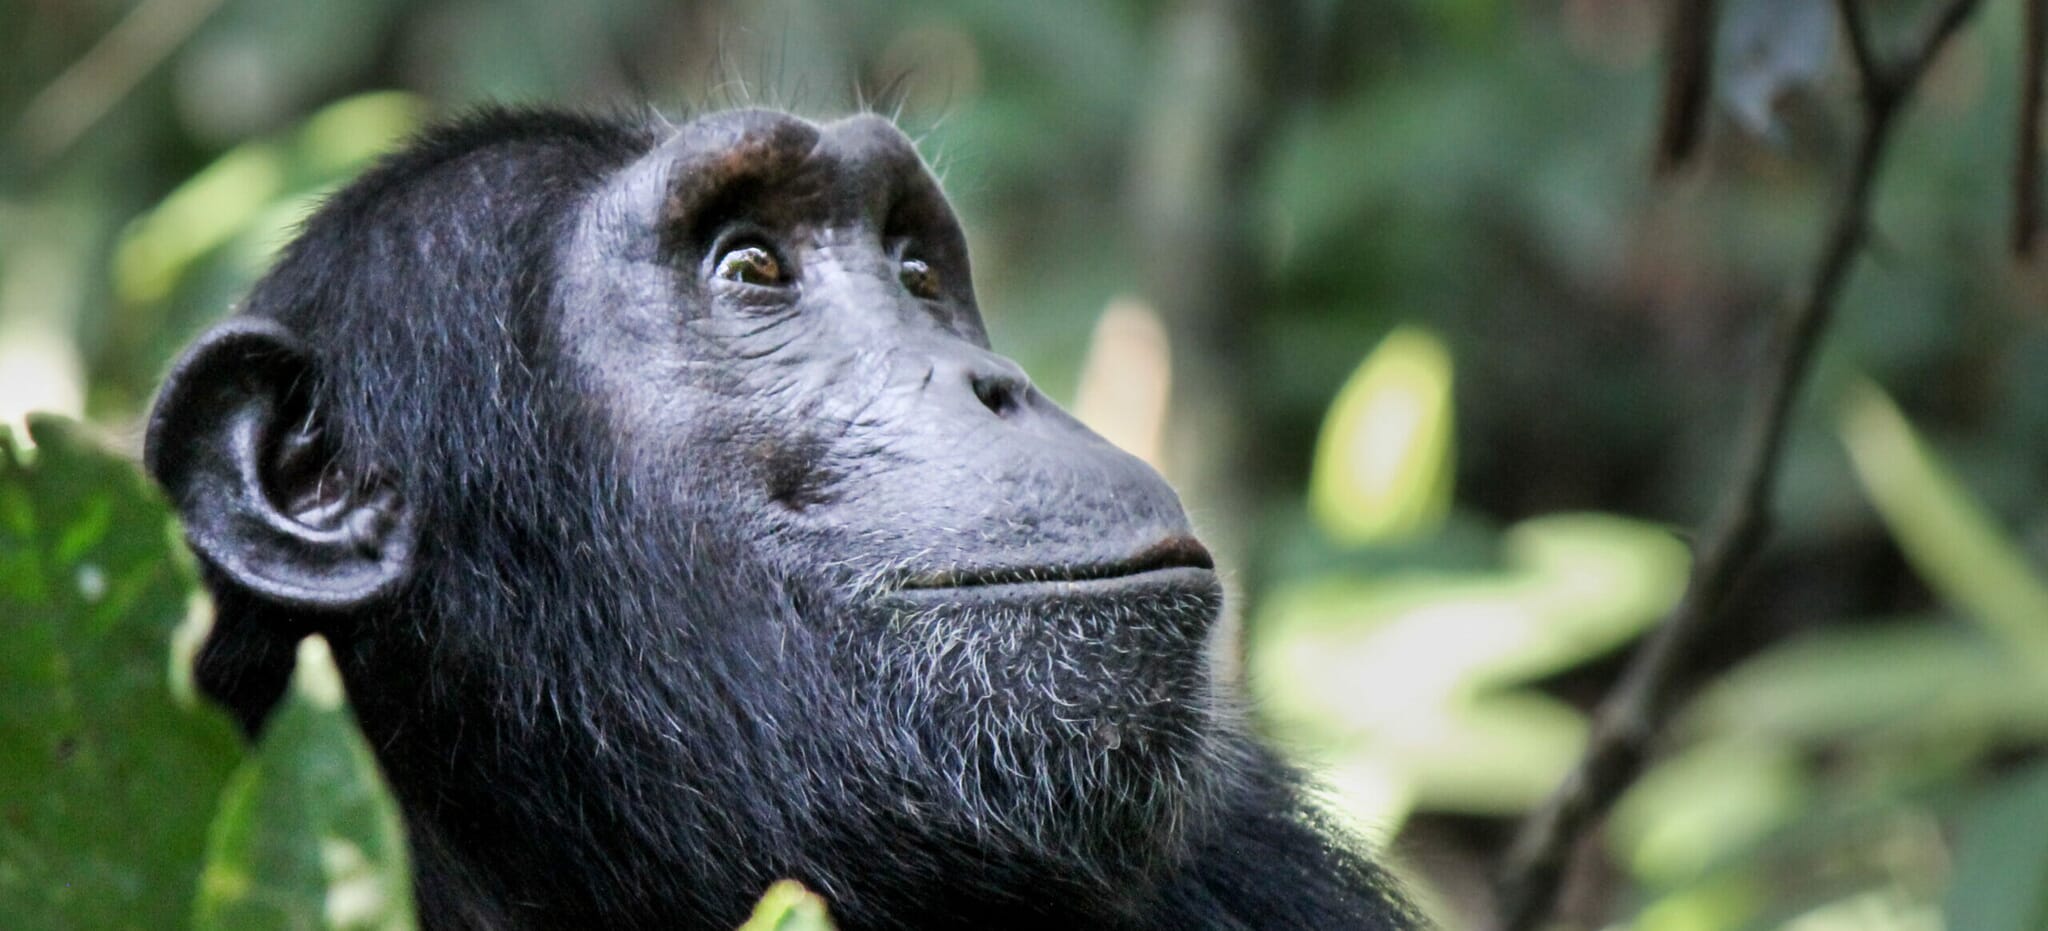 chimpanzee looking up tanzania Uganda family safari